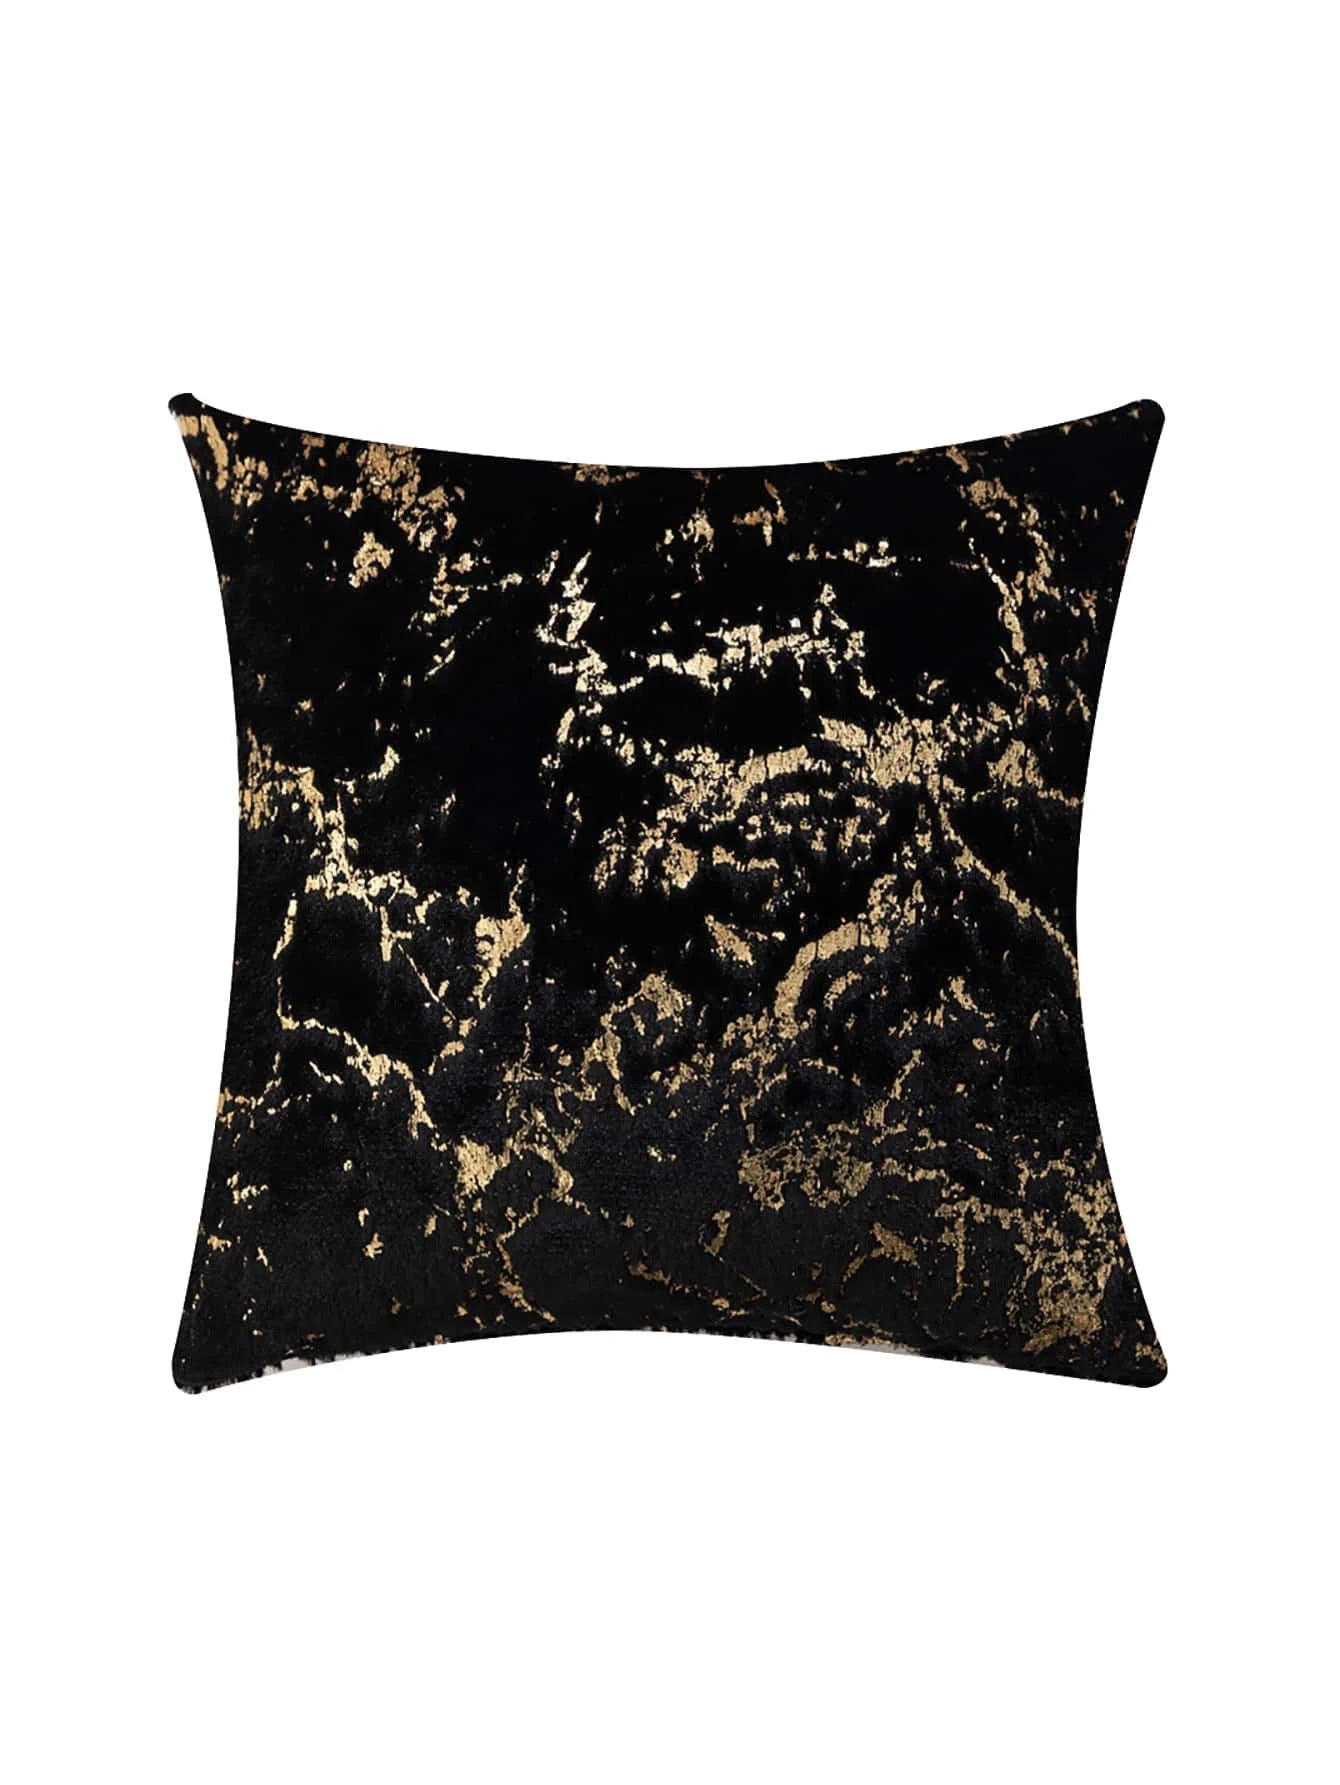  | Shein Metallic Pattern Plush Cushion Cover Without Filler | Pillow Cover | Shein | OneHub